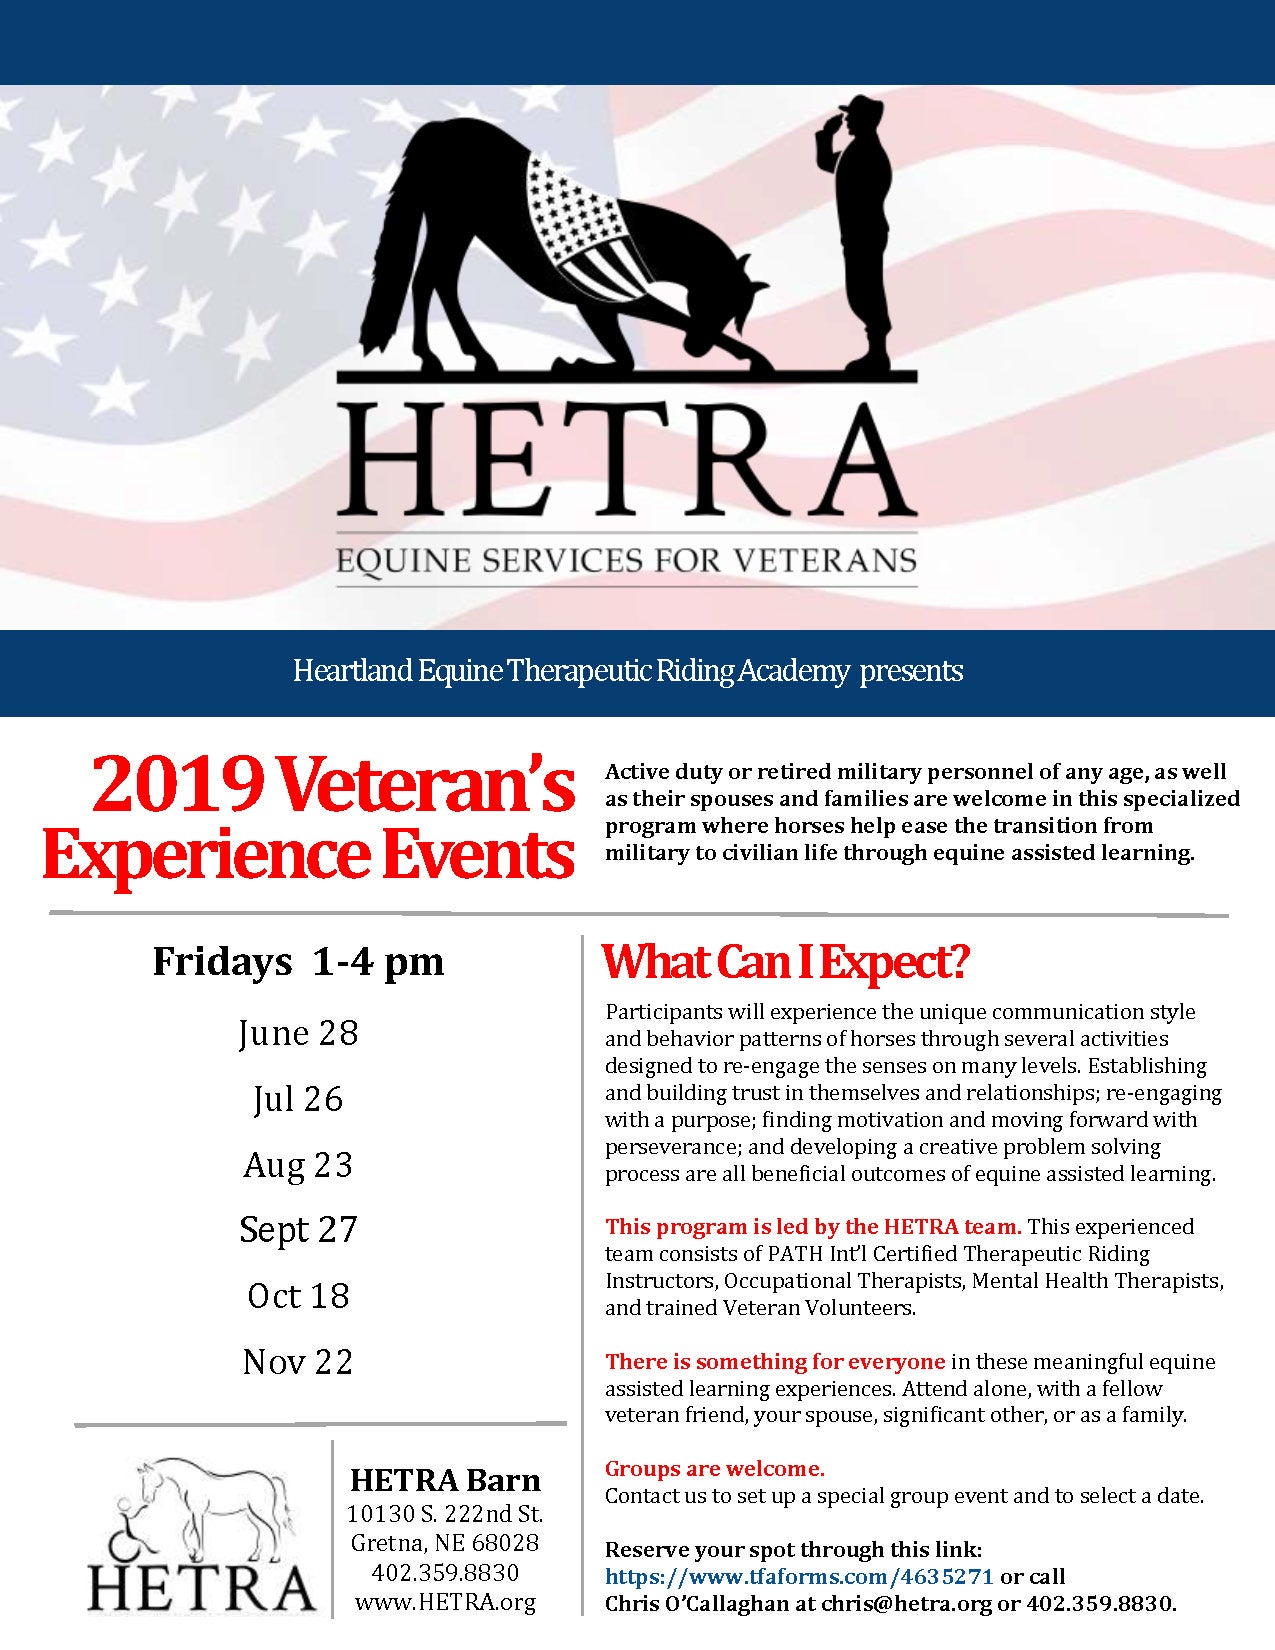 HETRA Equine Services For Veterans flyer